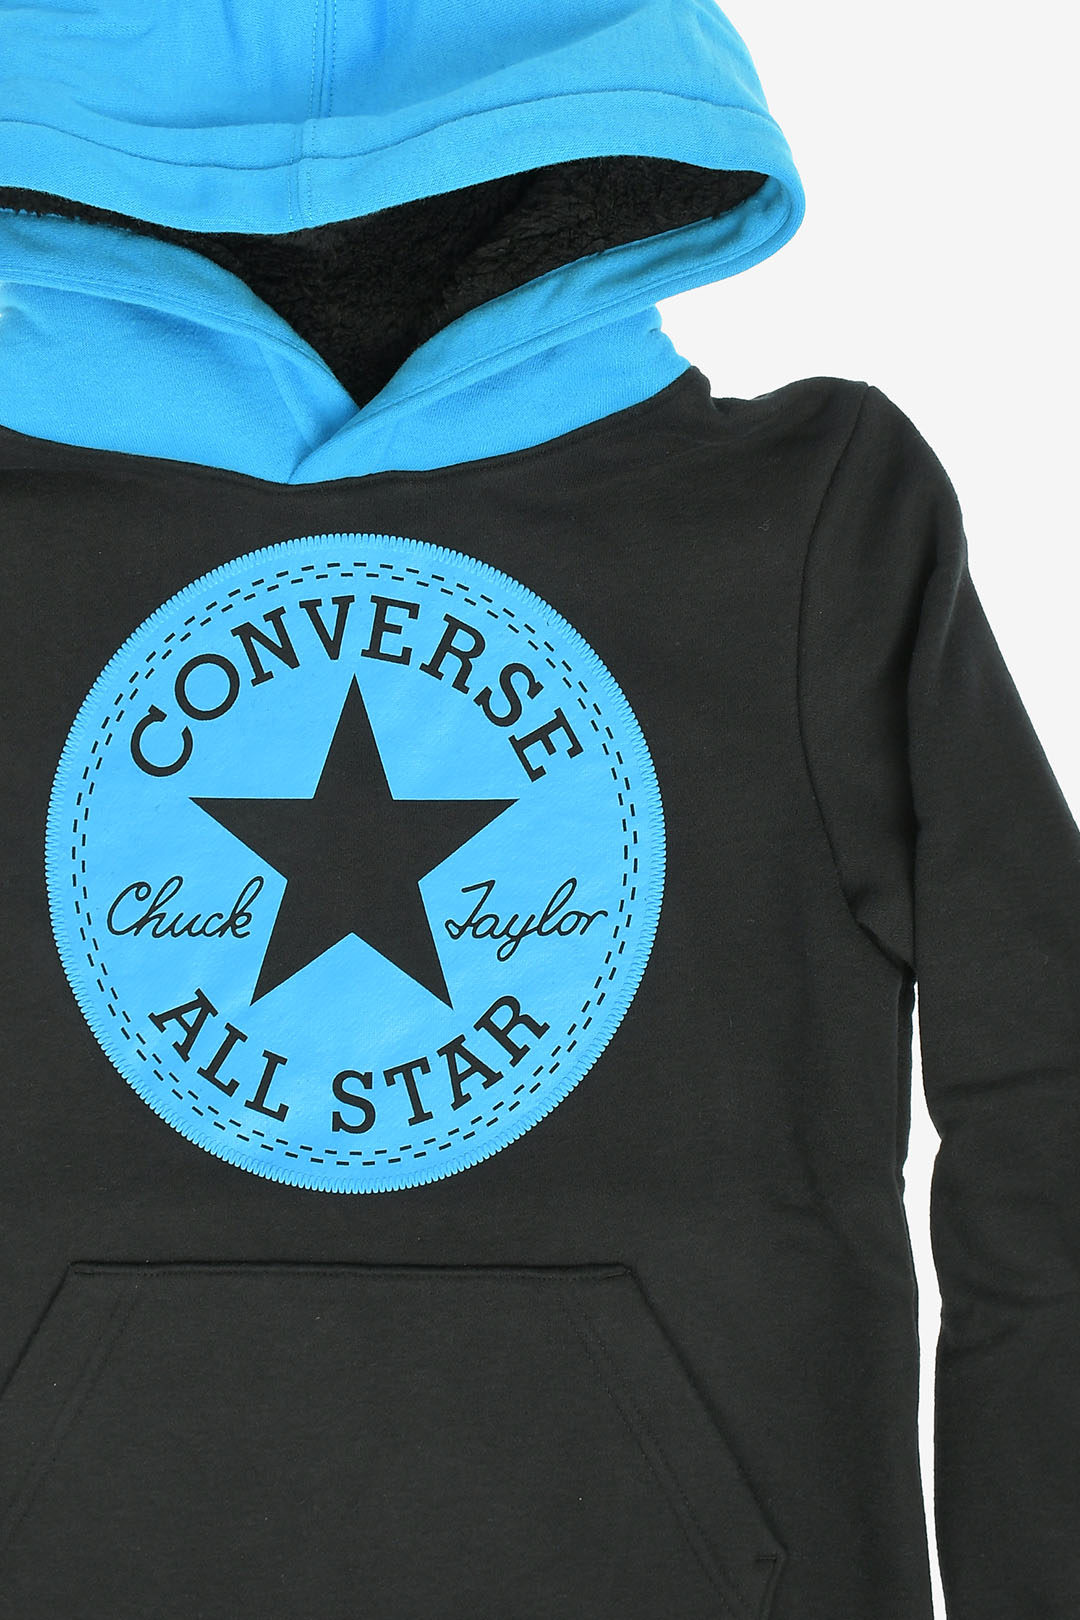 Converse KIDS ALL STAR Hooded Sweatshirt boys - Glamood Outlet